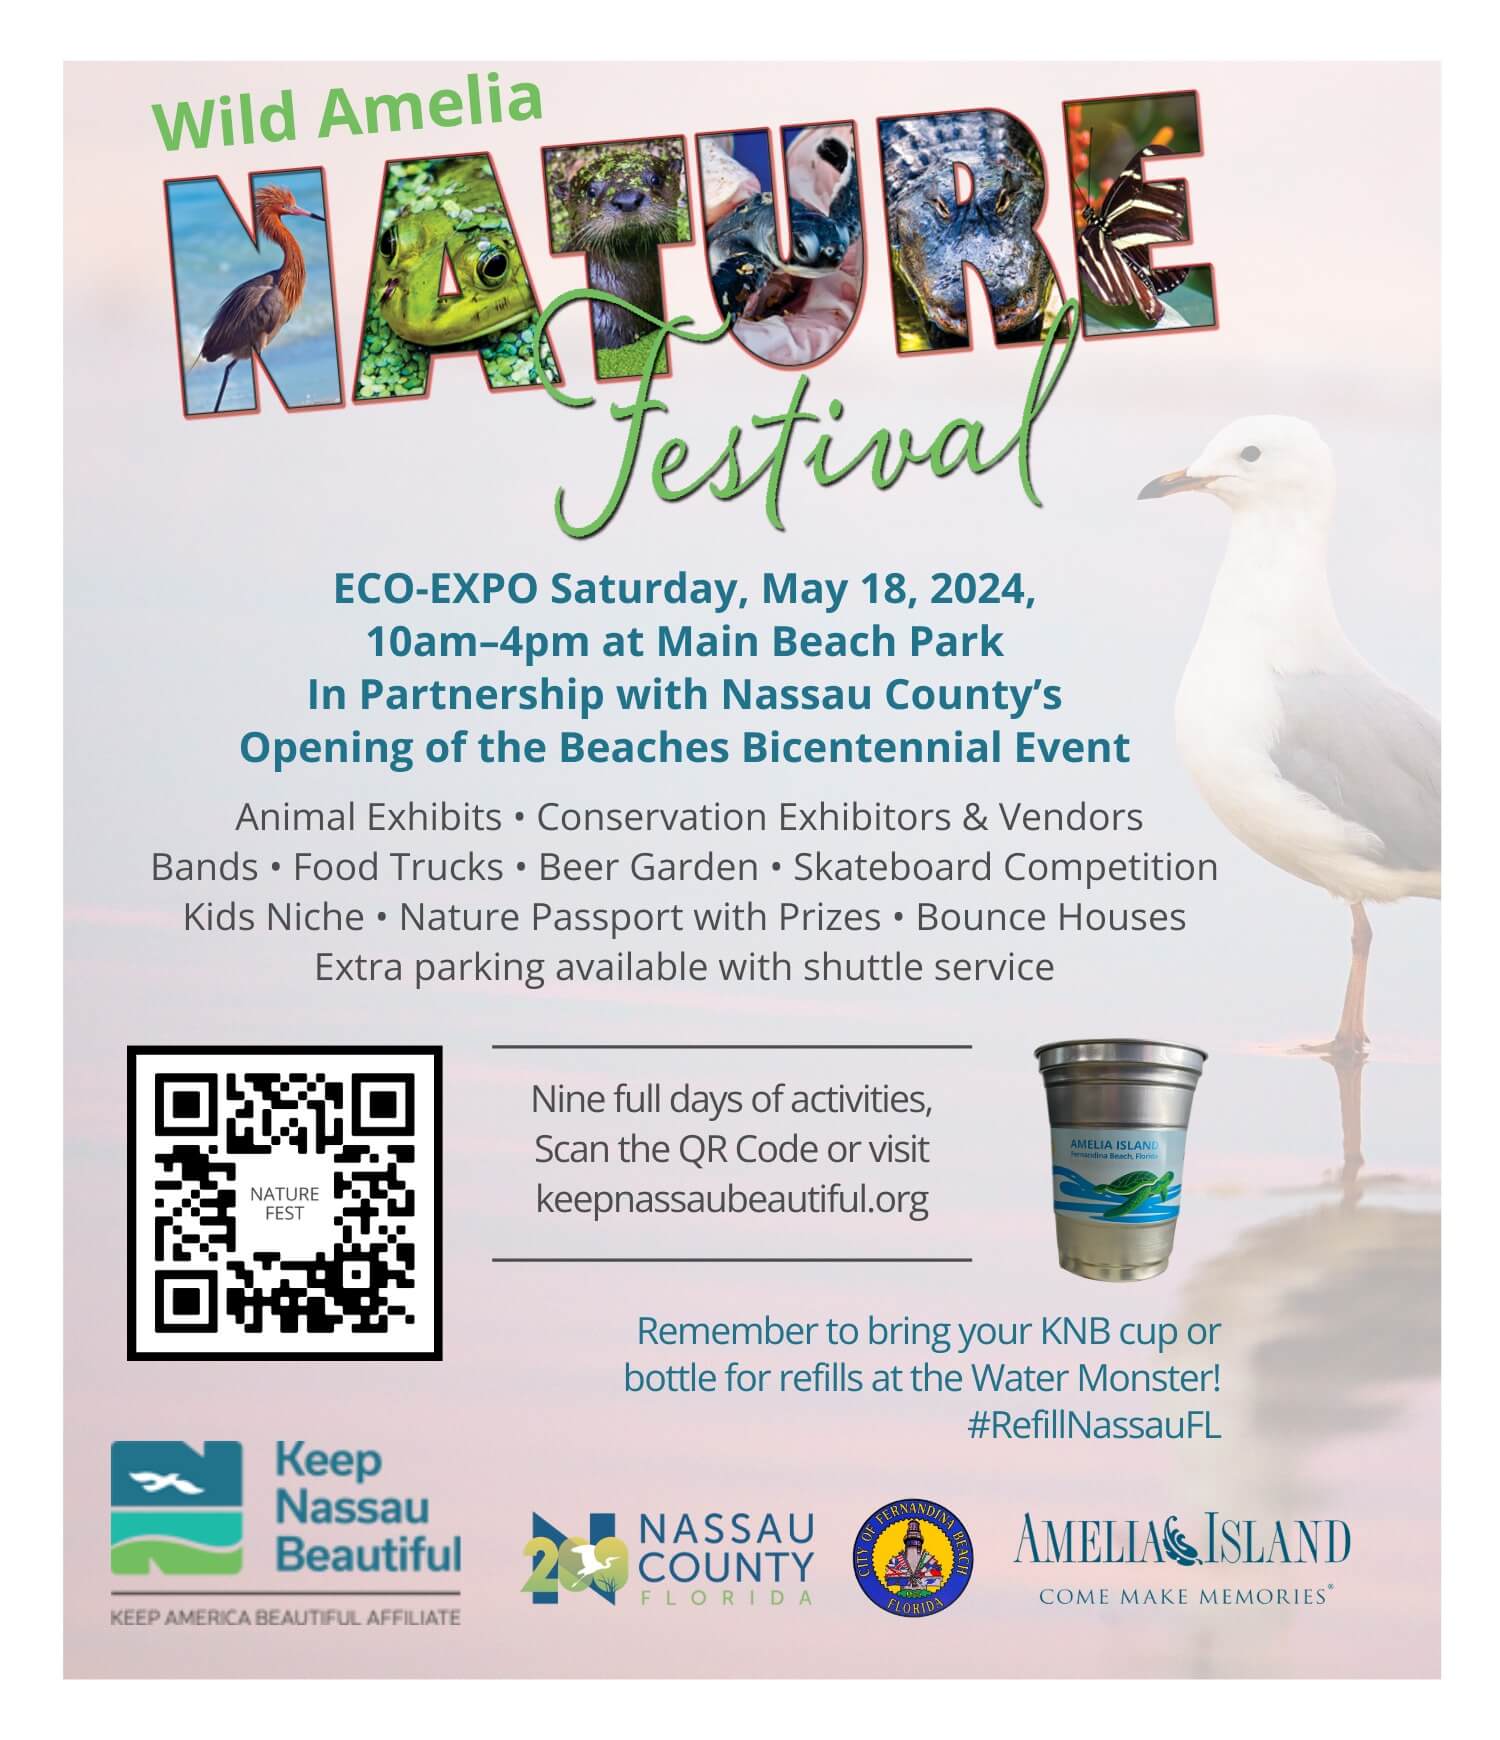 Wild Amelia Nature Festival EcoExpo Flyer